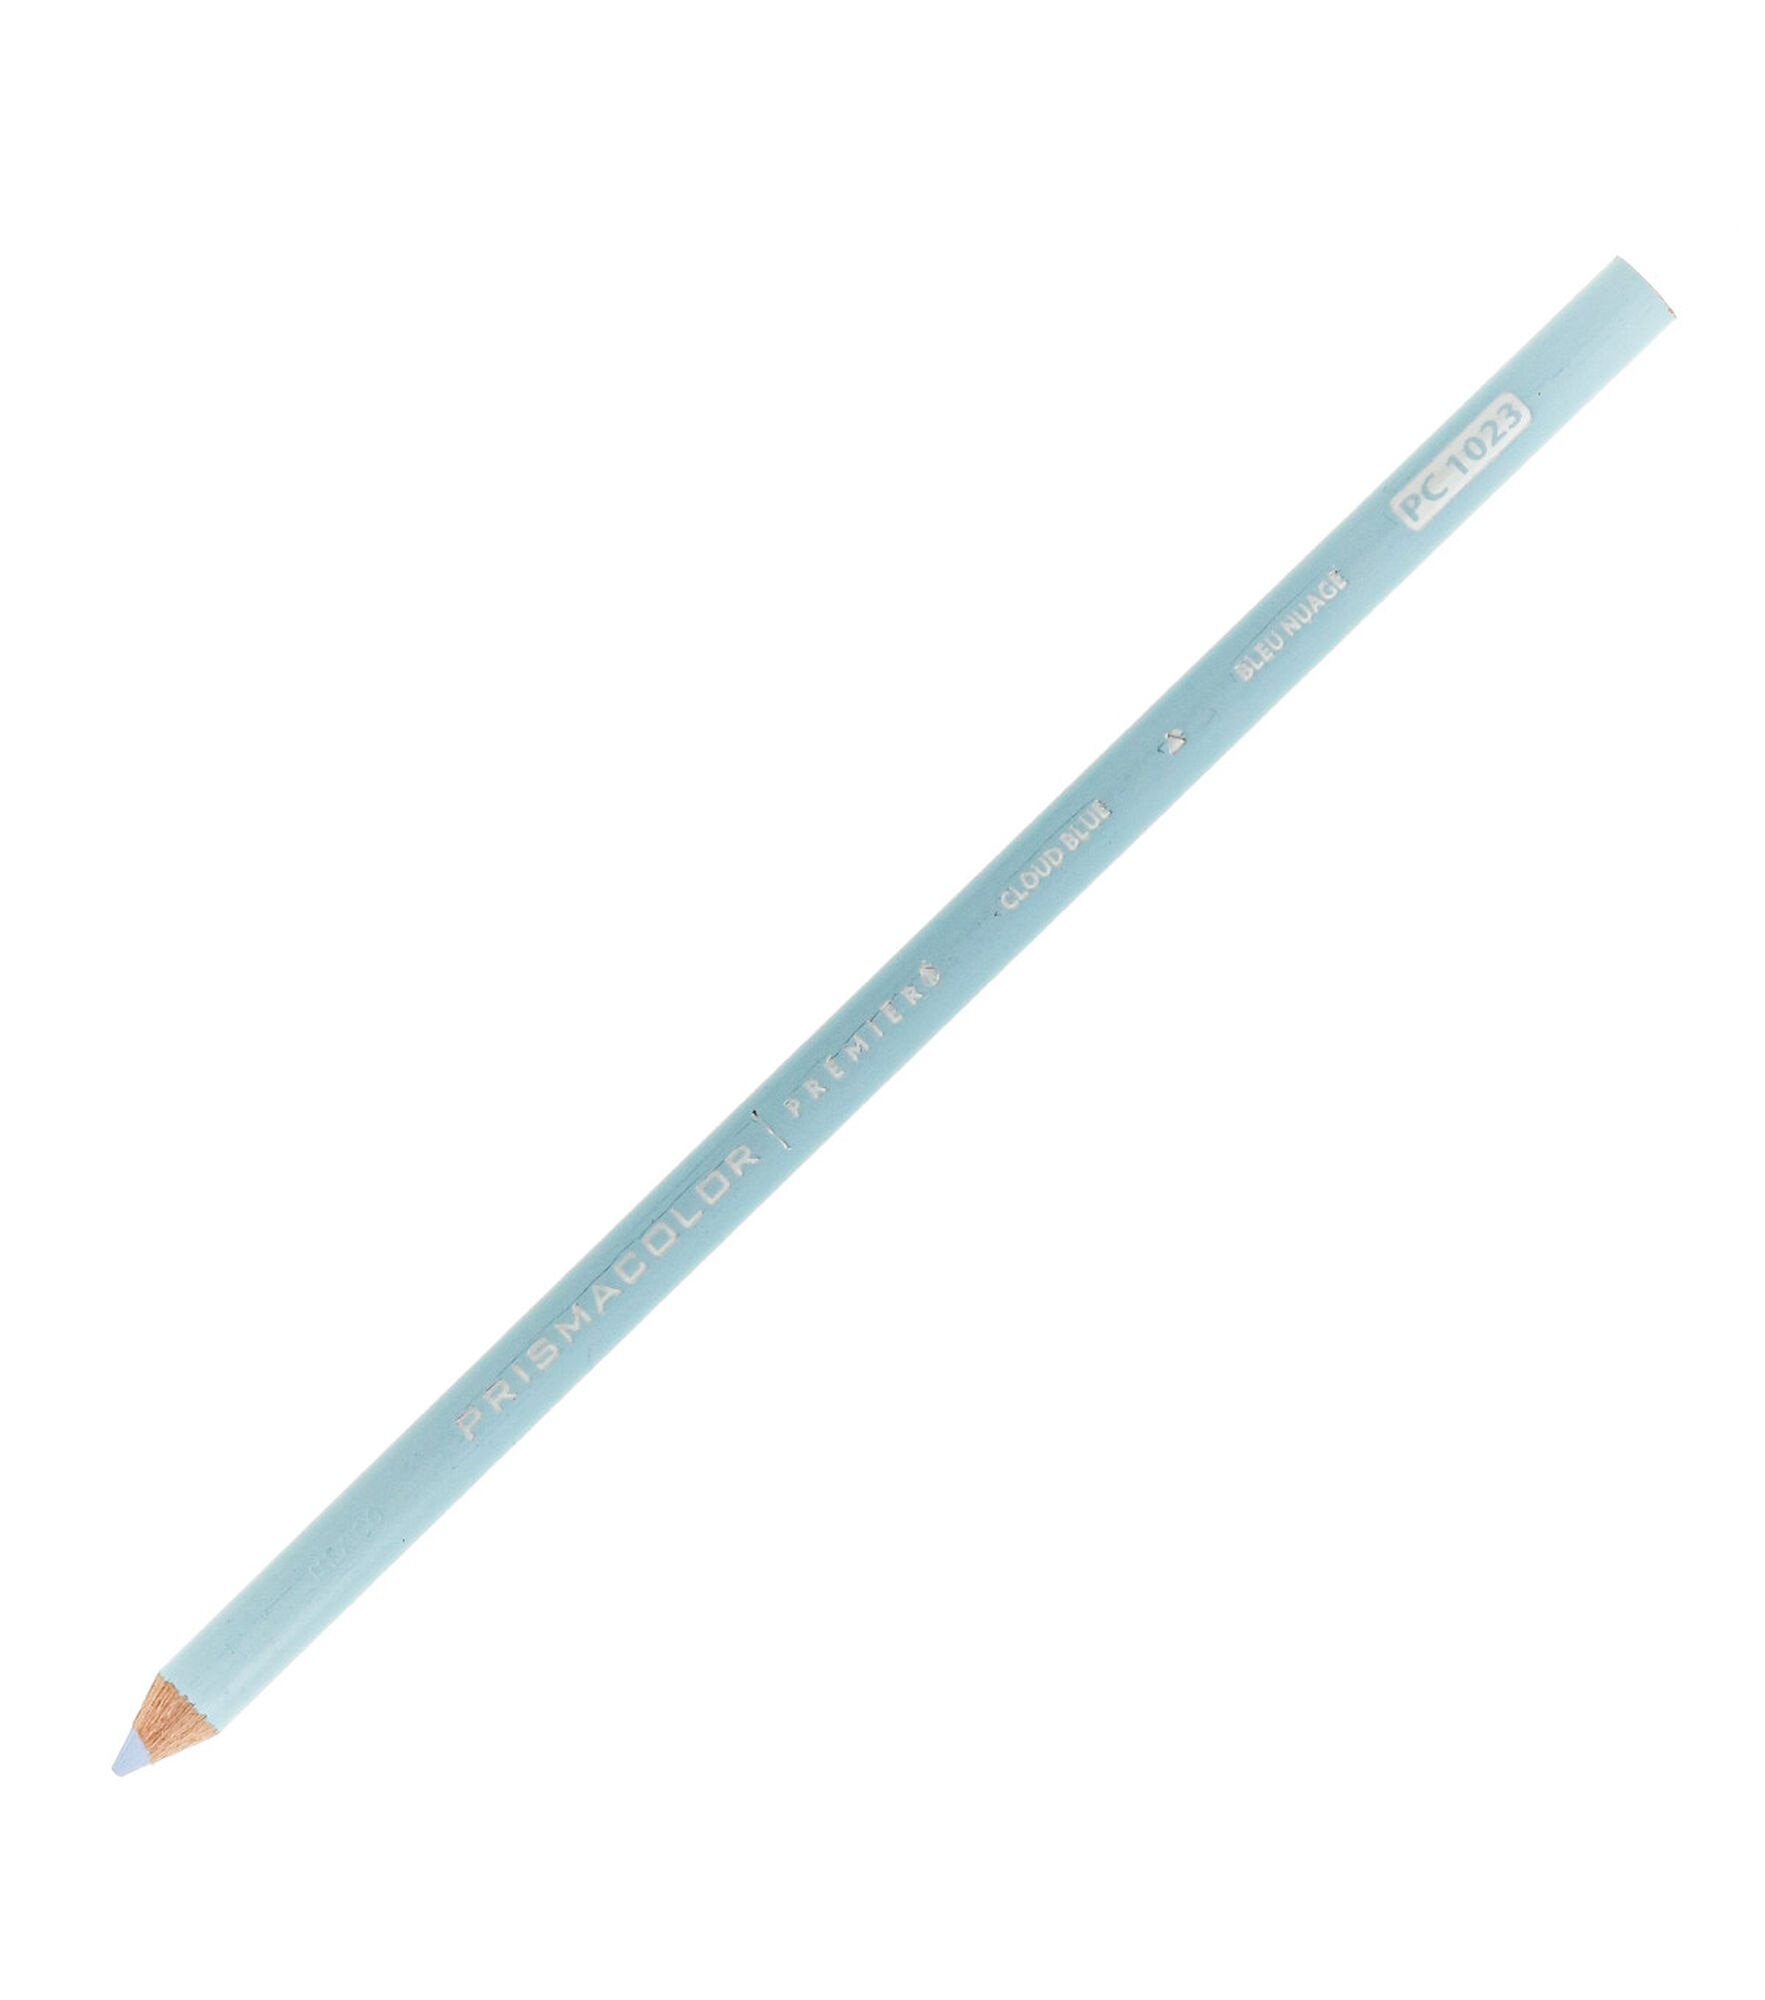 Prismacolor BLENDER PENCILS 6-Packs of 2 Pencils (12 Pencils Total)